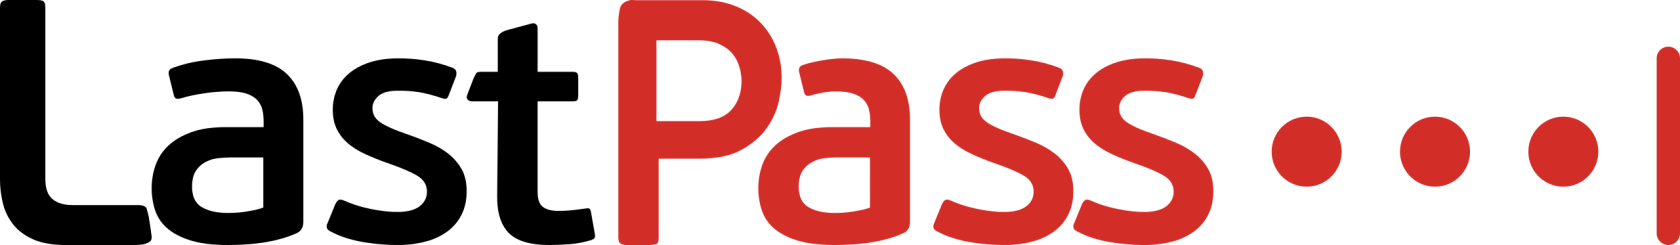 LastPass_logo.png